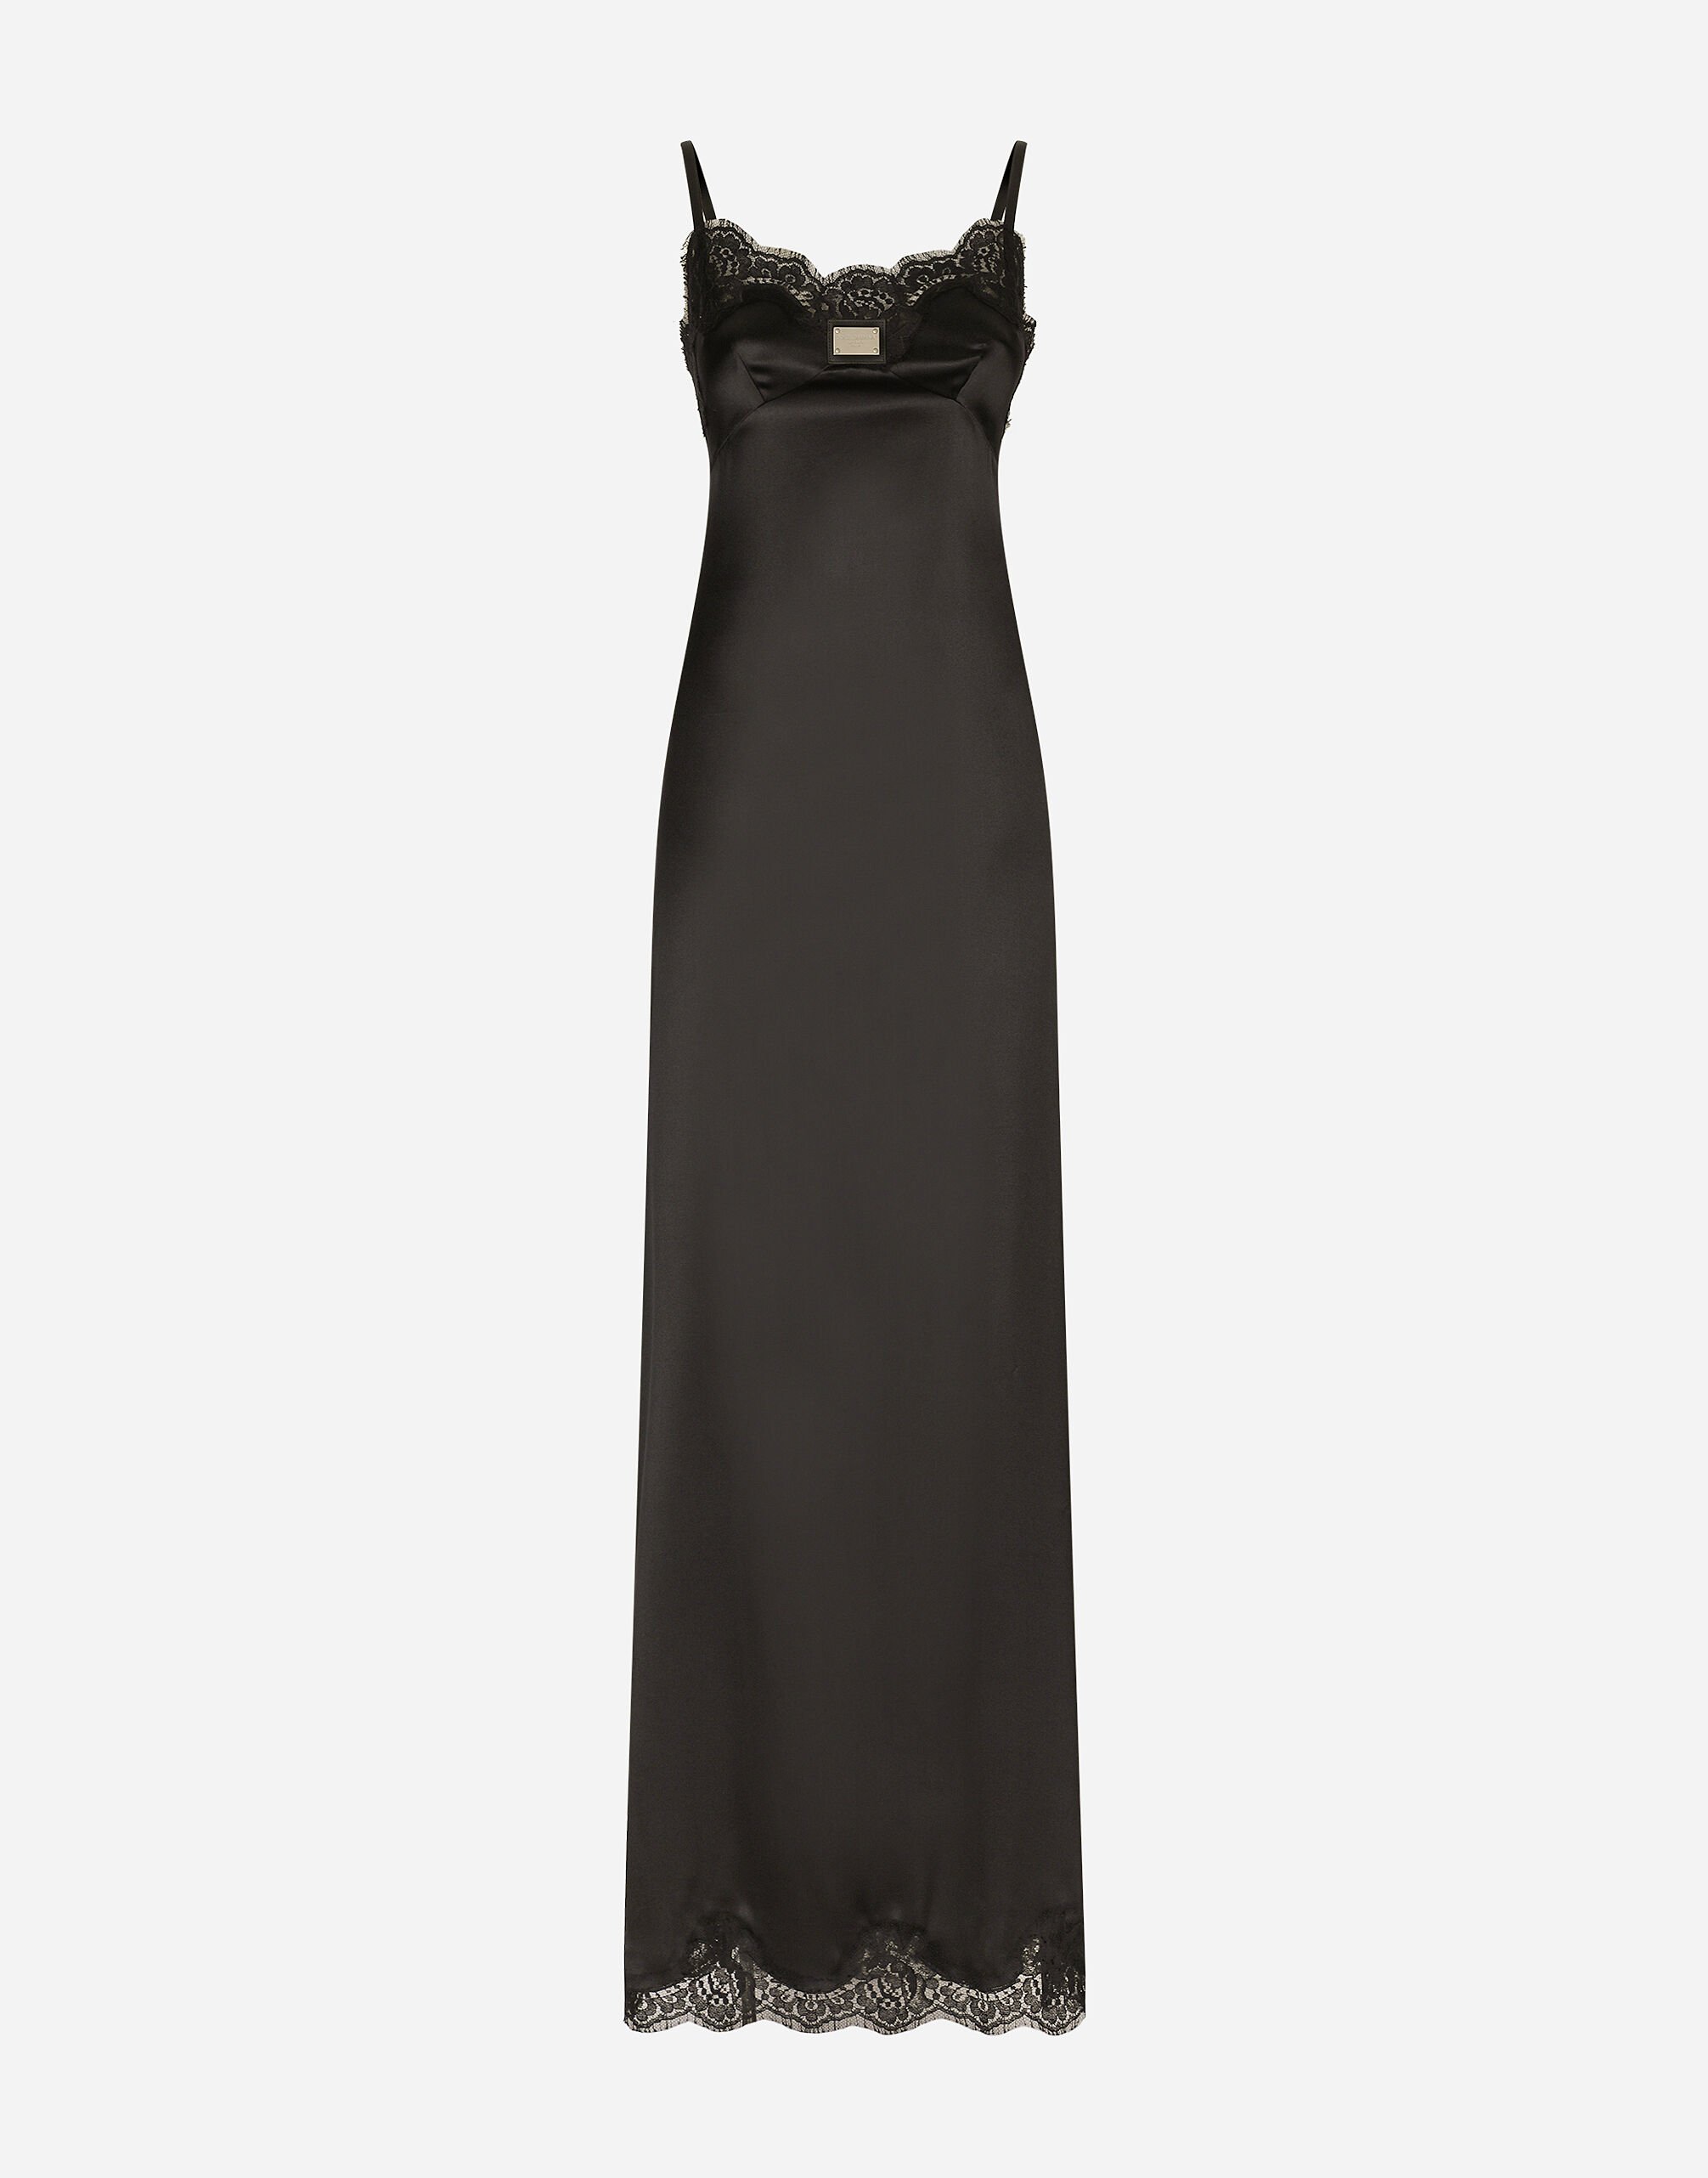 Dolce&Gabbana Long satin slip dress with the Dolce&Gabbana tag Black F79BRTHLM9K